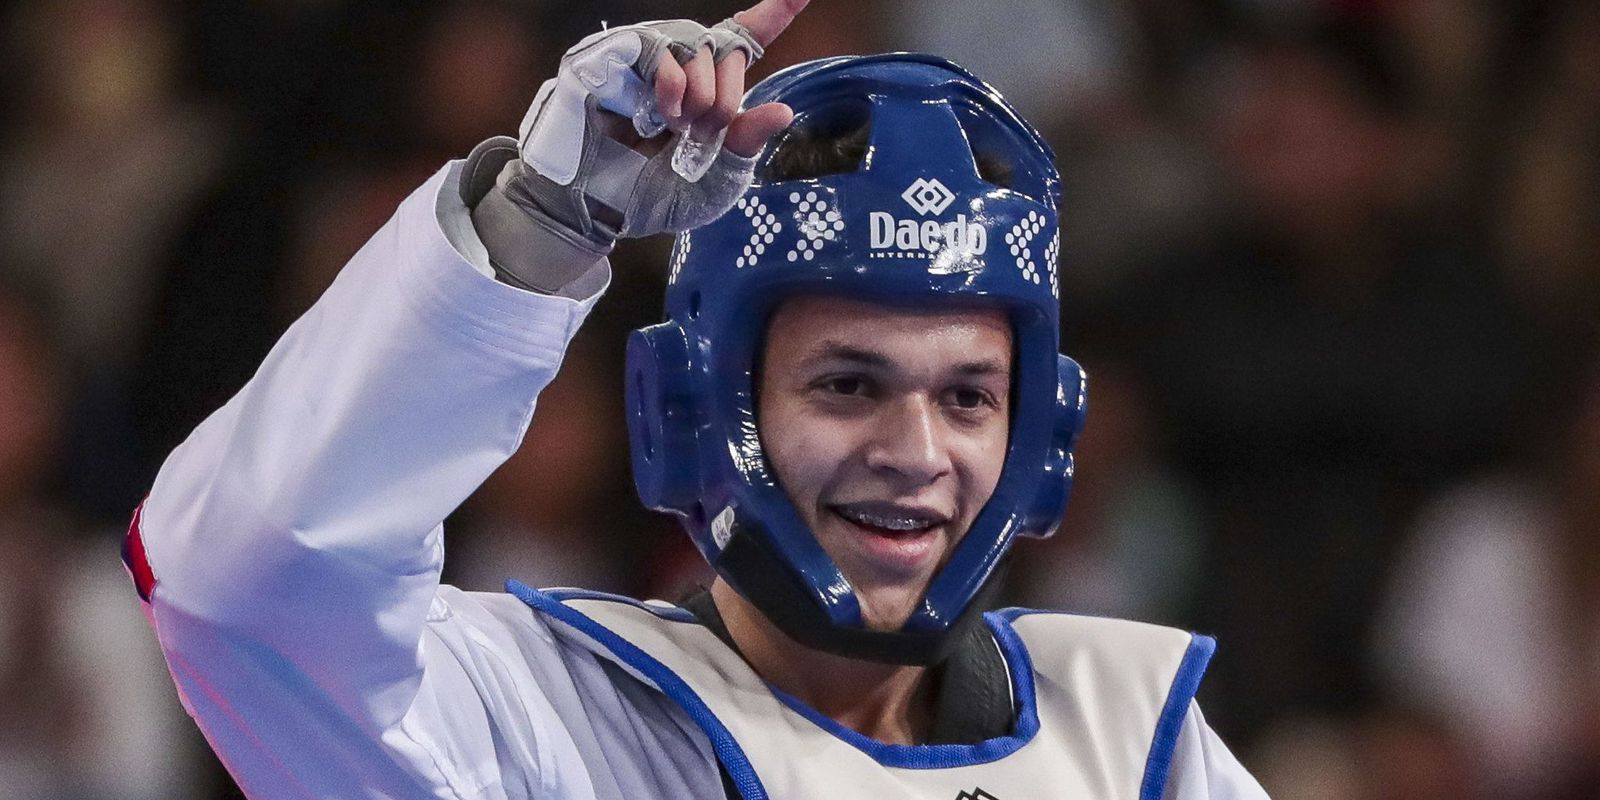 Parataekwondo: Brazil wins three medals at Sofia Grand Prix